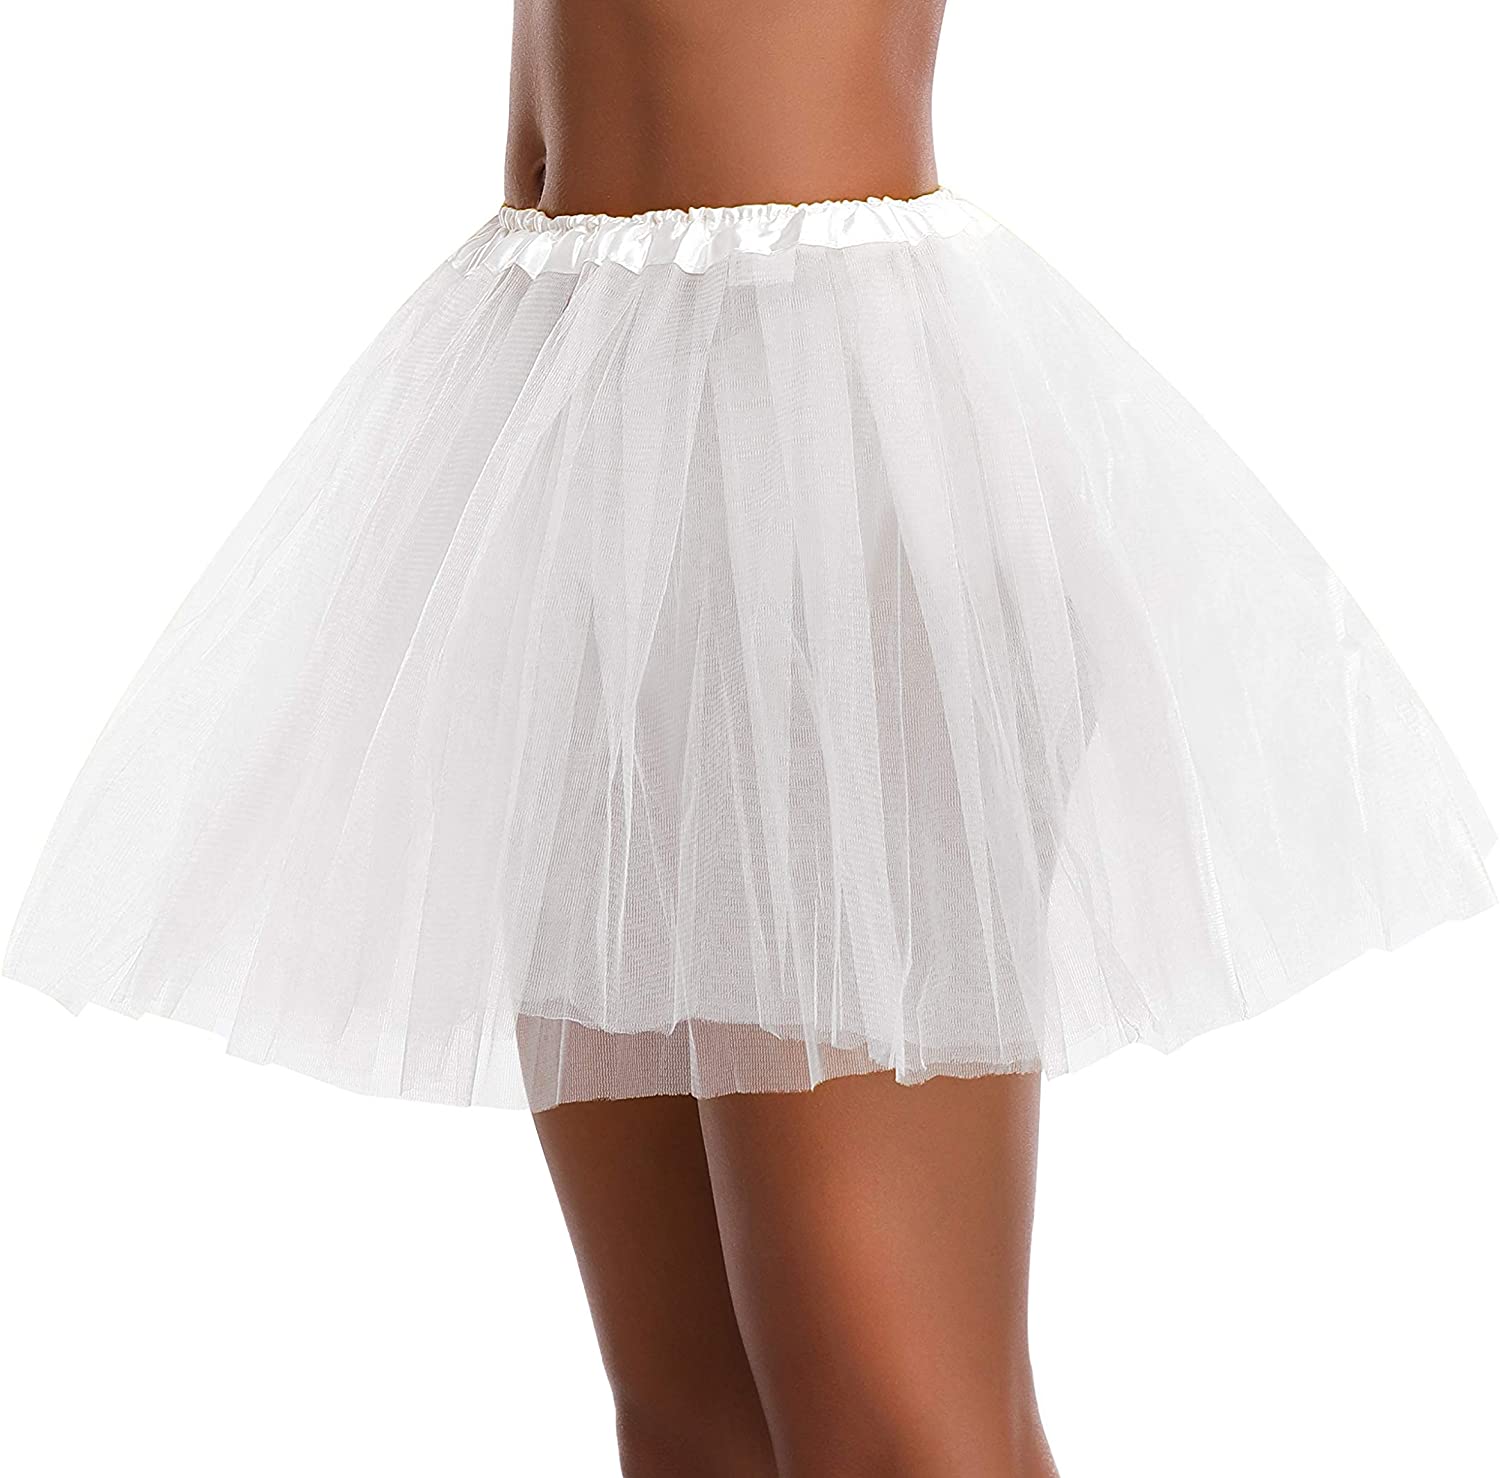 Women's Teen 5 Layered Tulle Tutu Skirt Adult Classic Elastic 3 4 